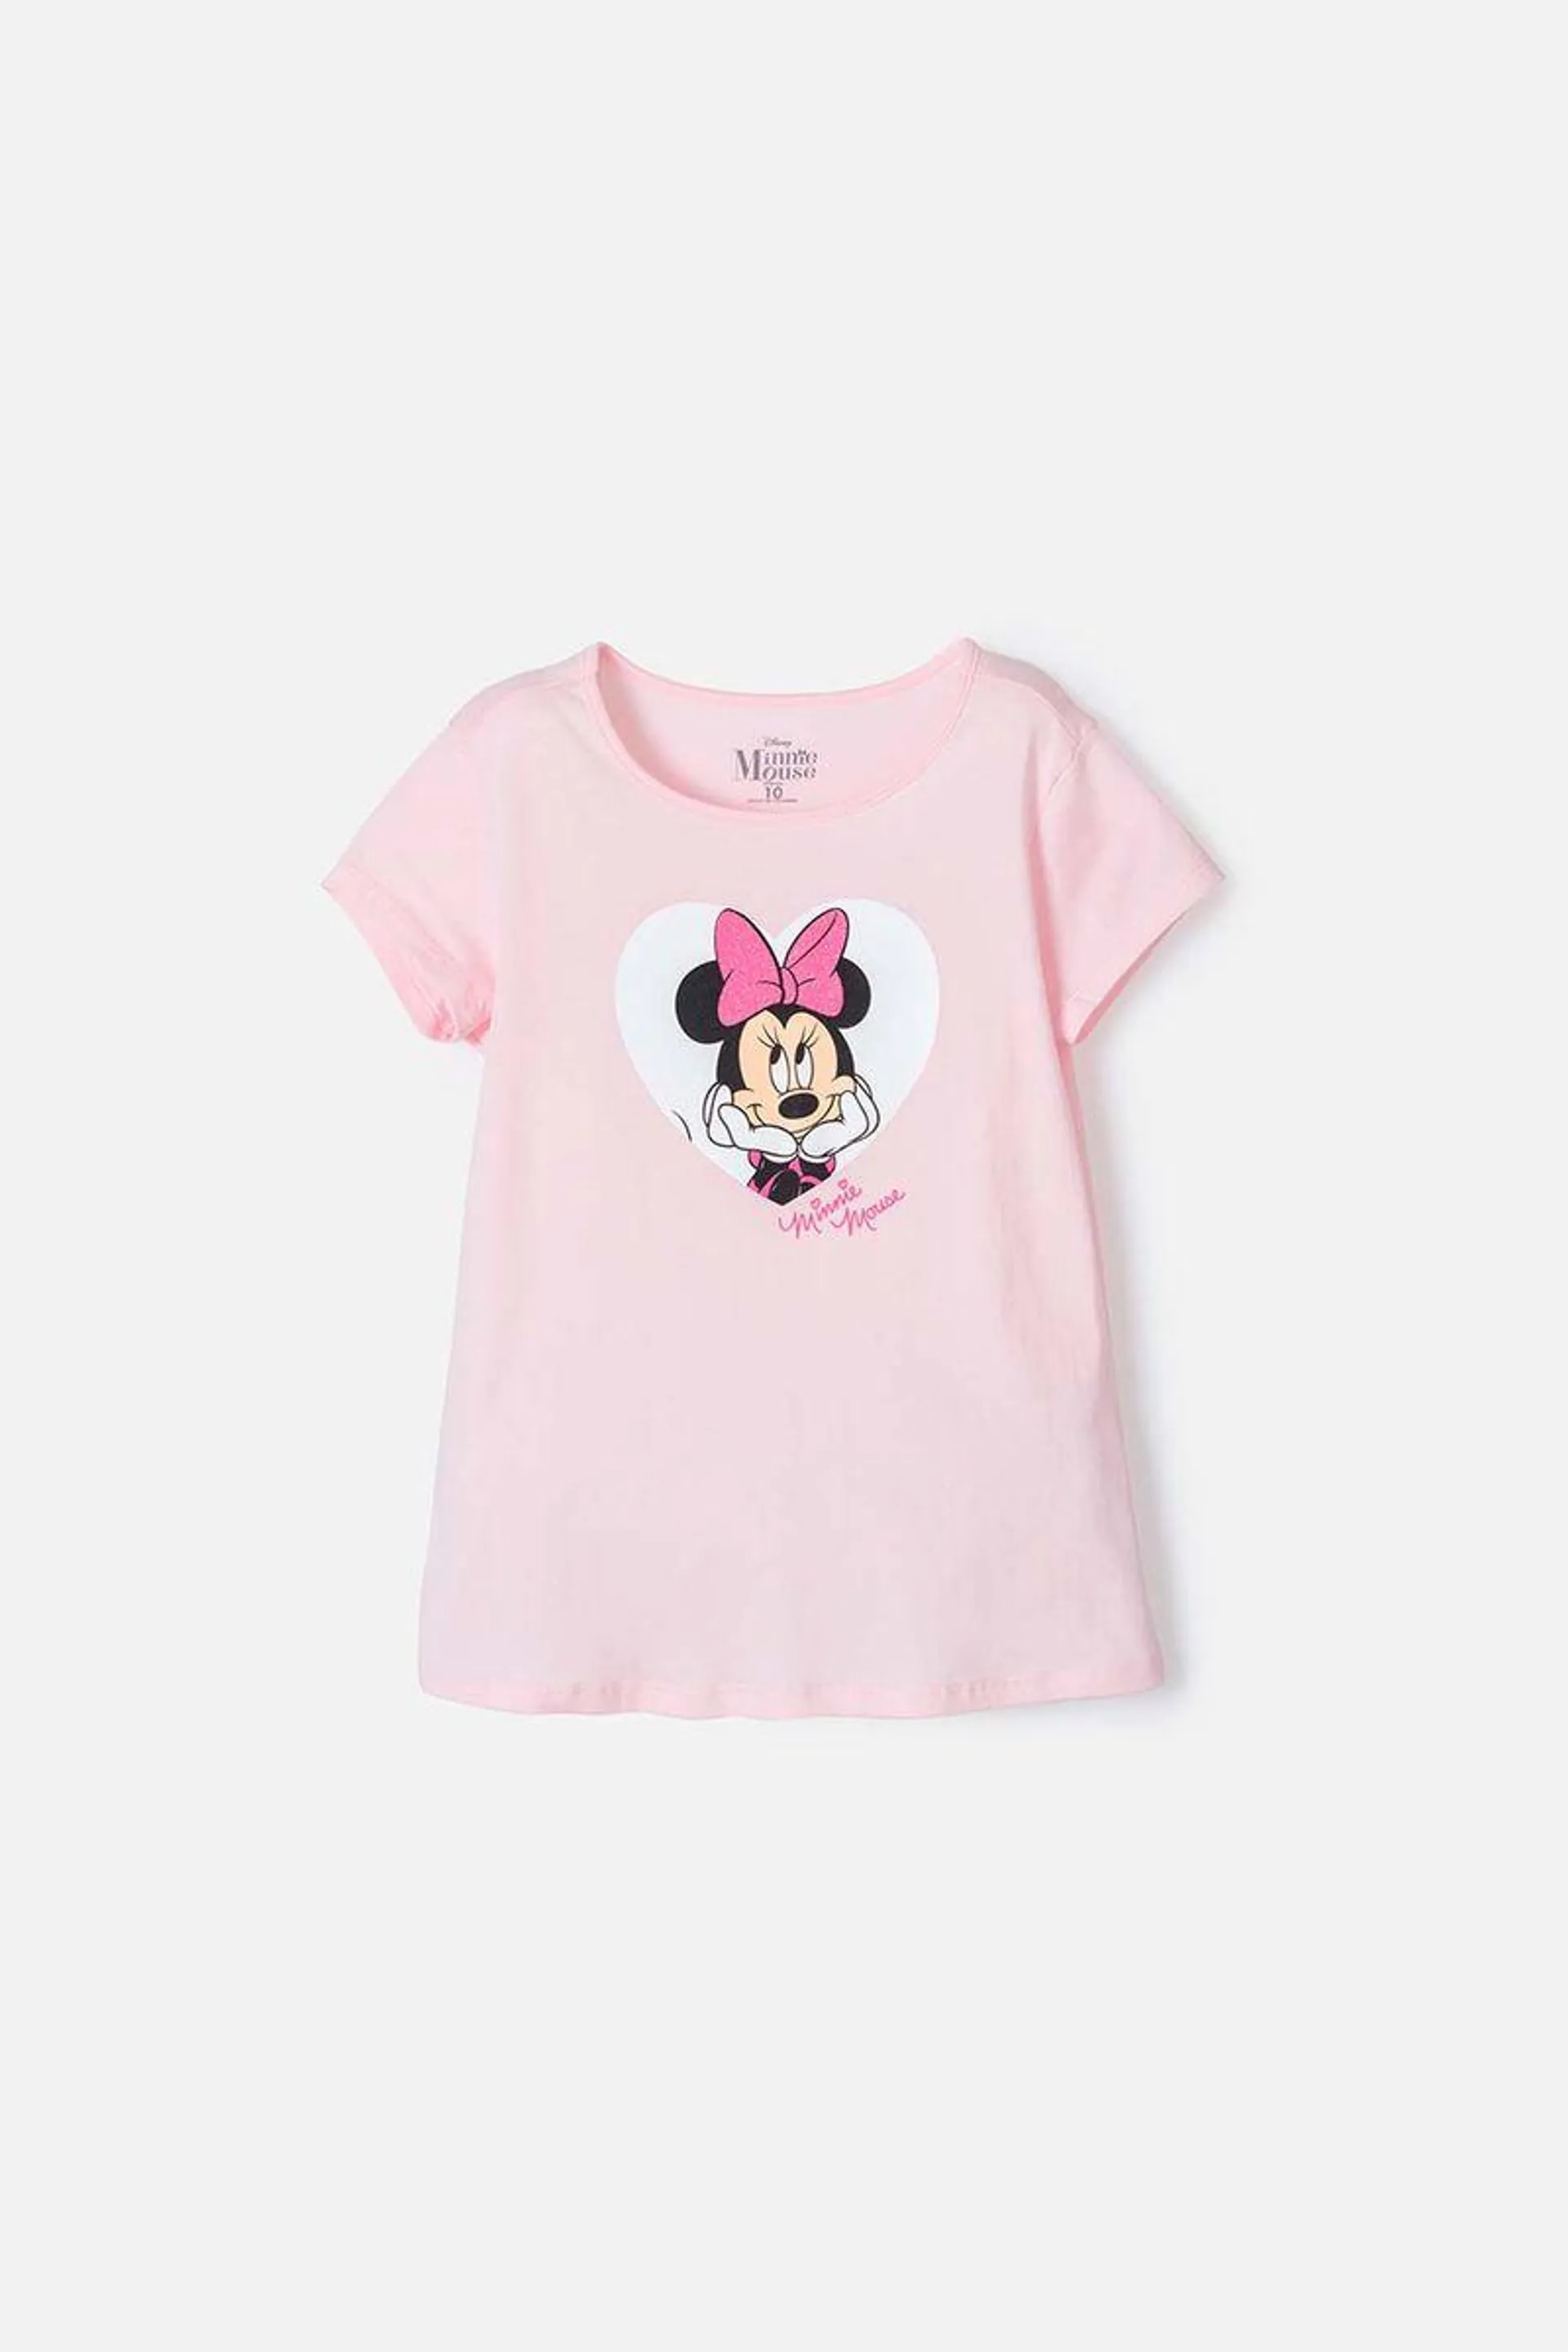 Camiseta de niña, manga corta rosada de Minnie Mouse ©Disney